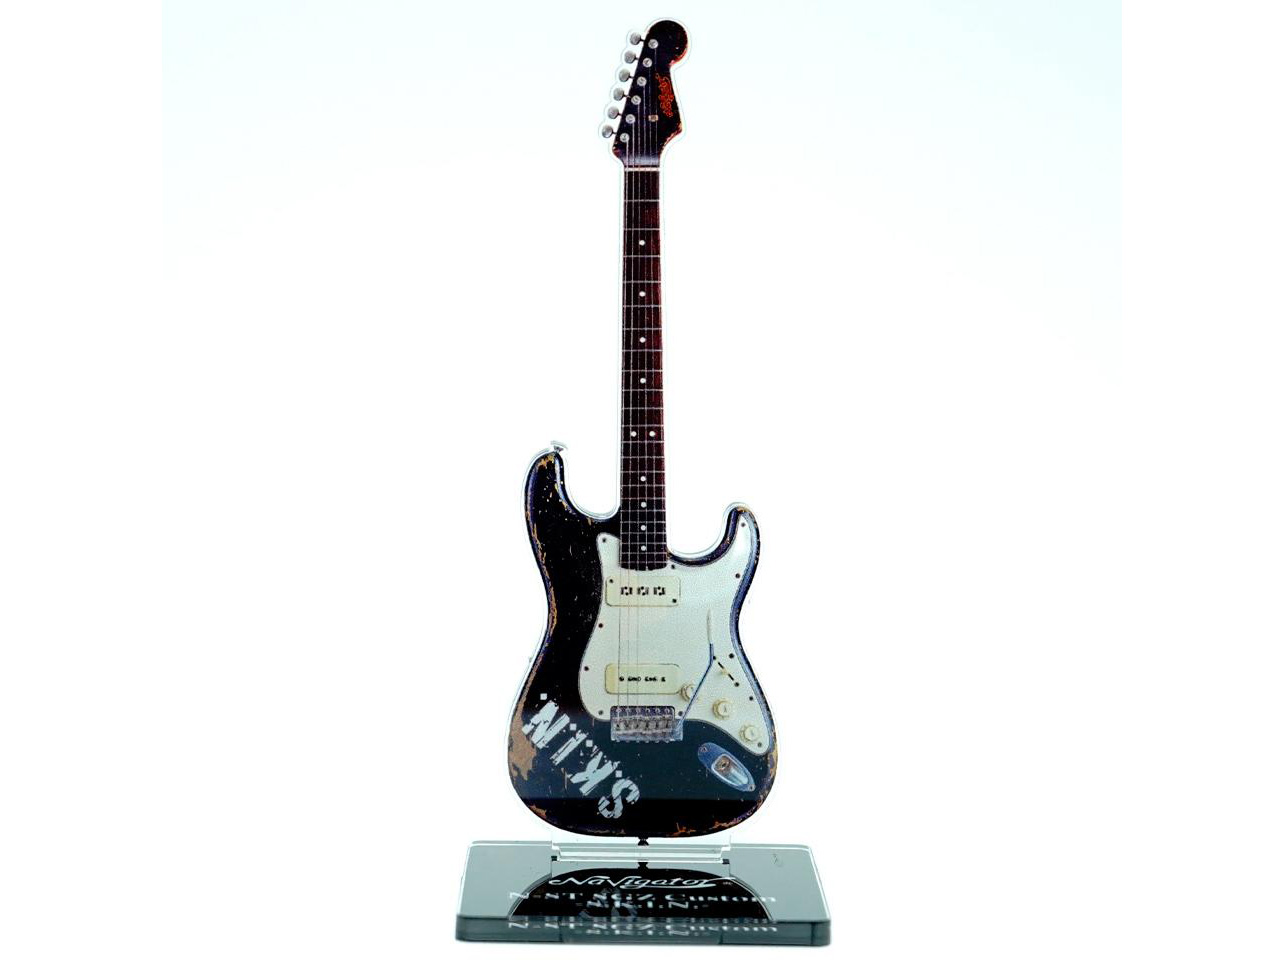 ESP Acrylic Keyholder Guitar Collection -SUGIZO Vol.1- AS-SGZ-02 (Navigator N-ST SGZ Custom -S.K.I.N.-) / スタンドタイプ